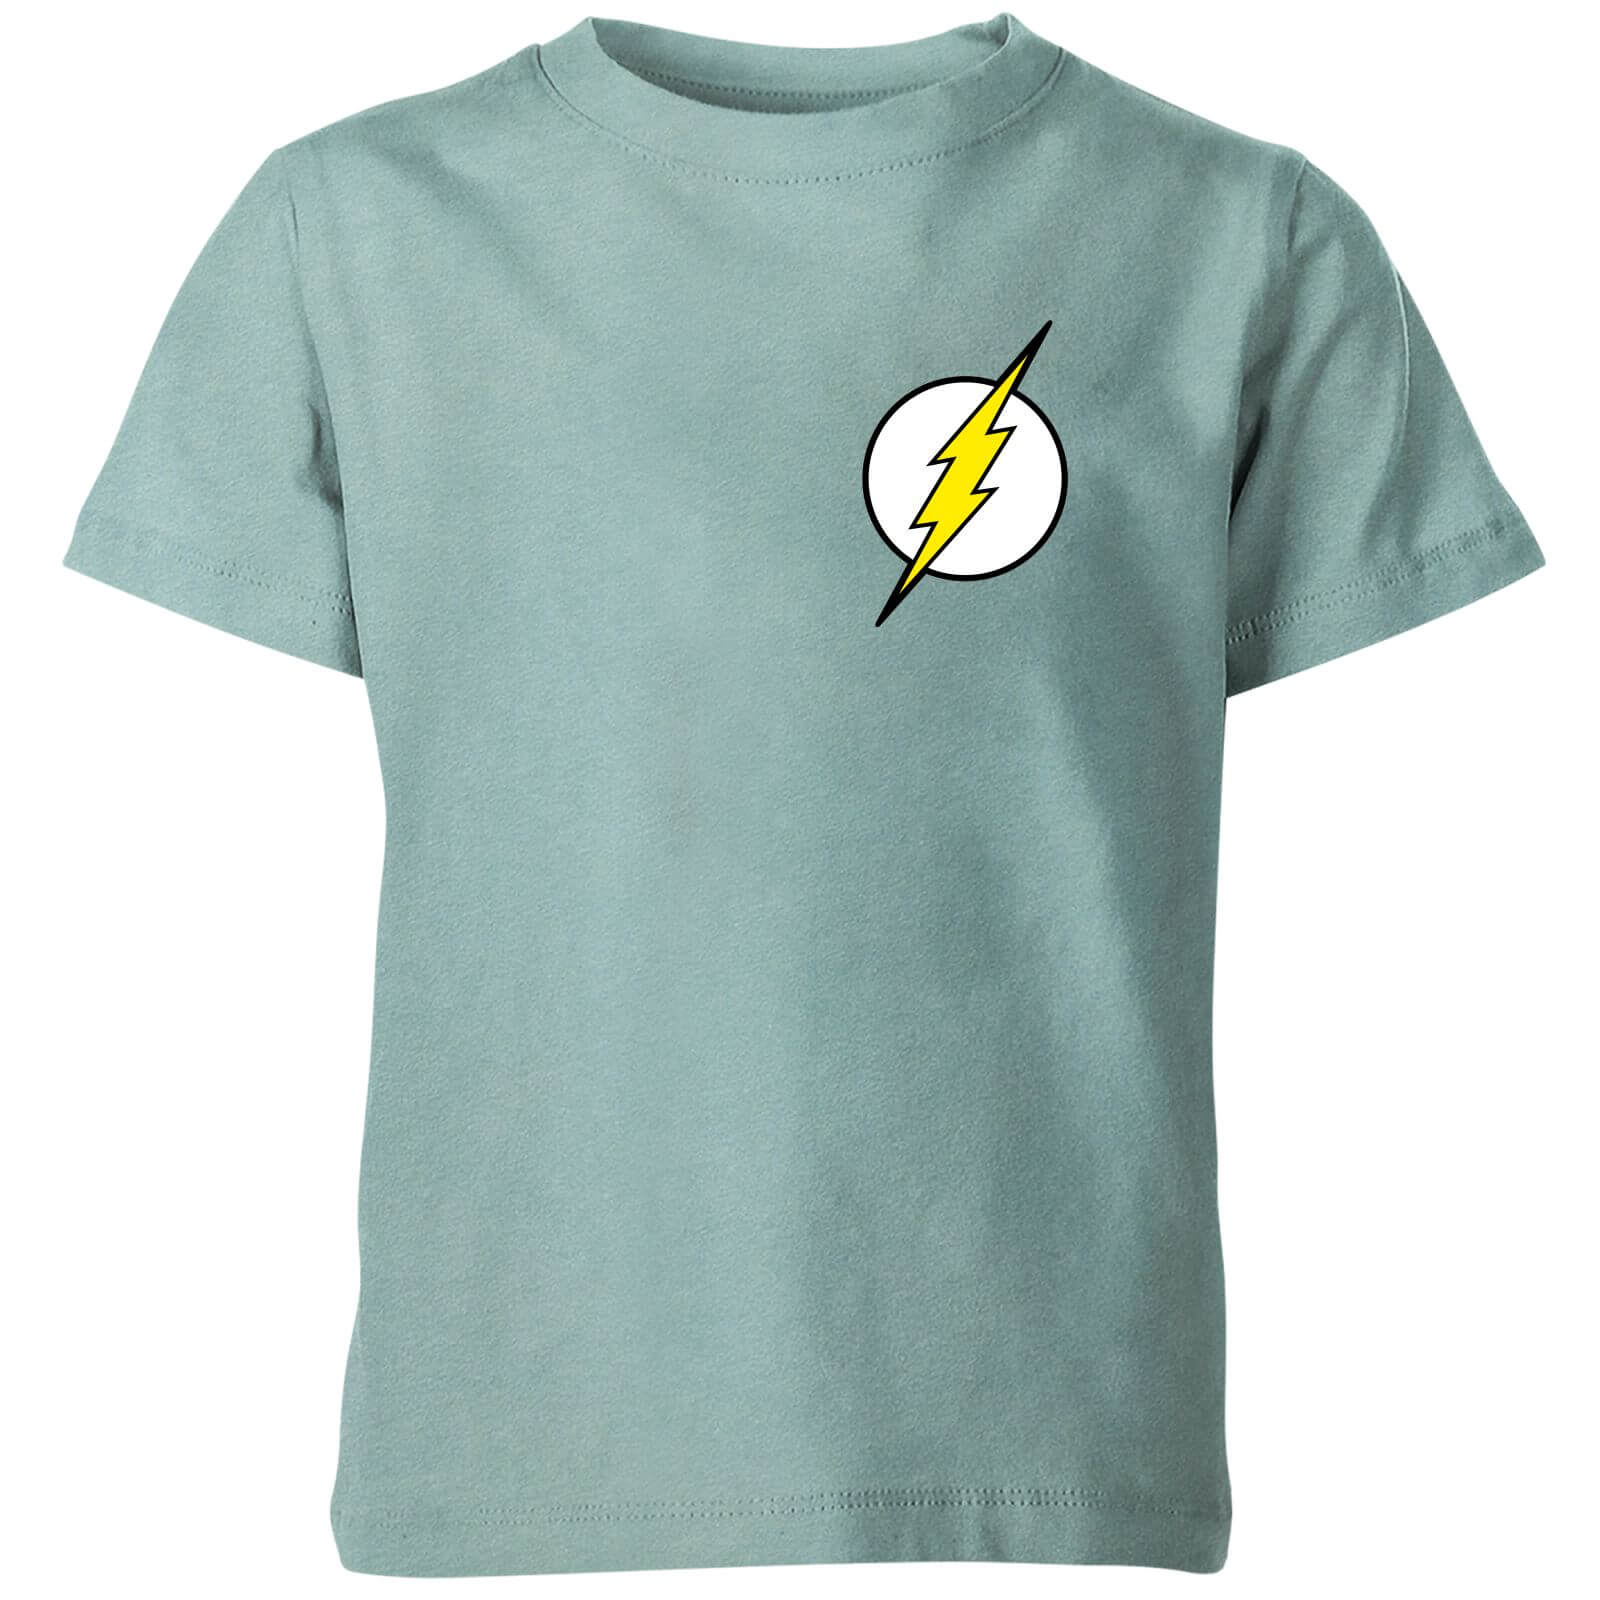 Flash Gordon Logo Kids' T-Shirt - Mint Acid Wash - 3-4 Years